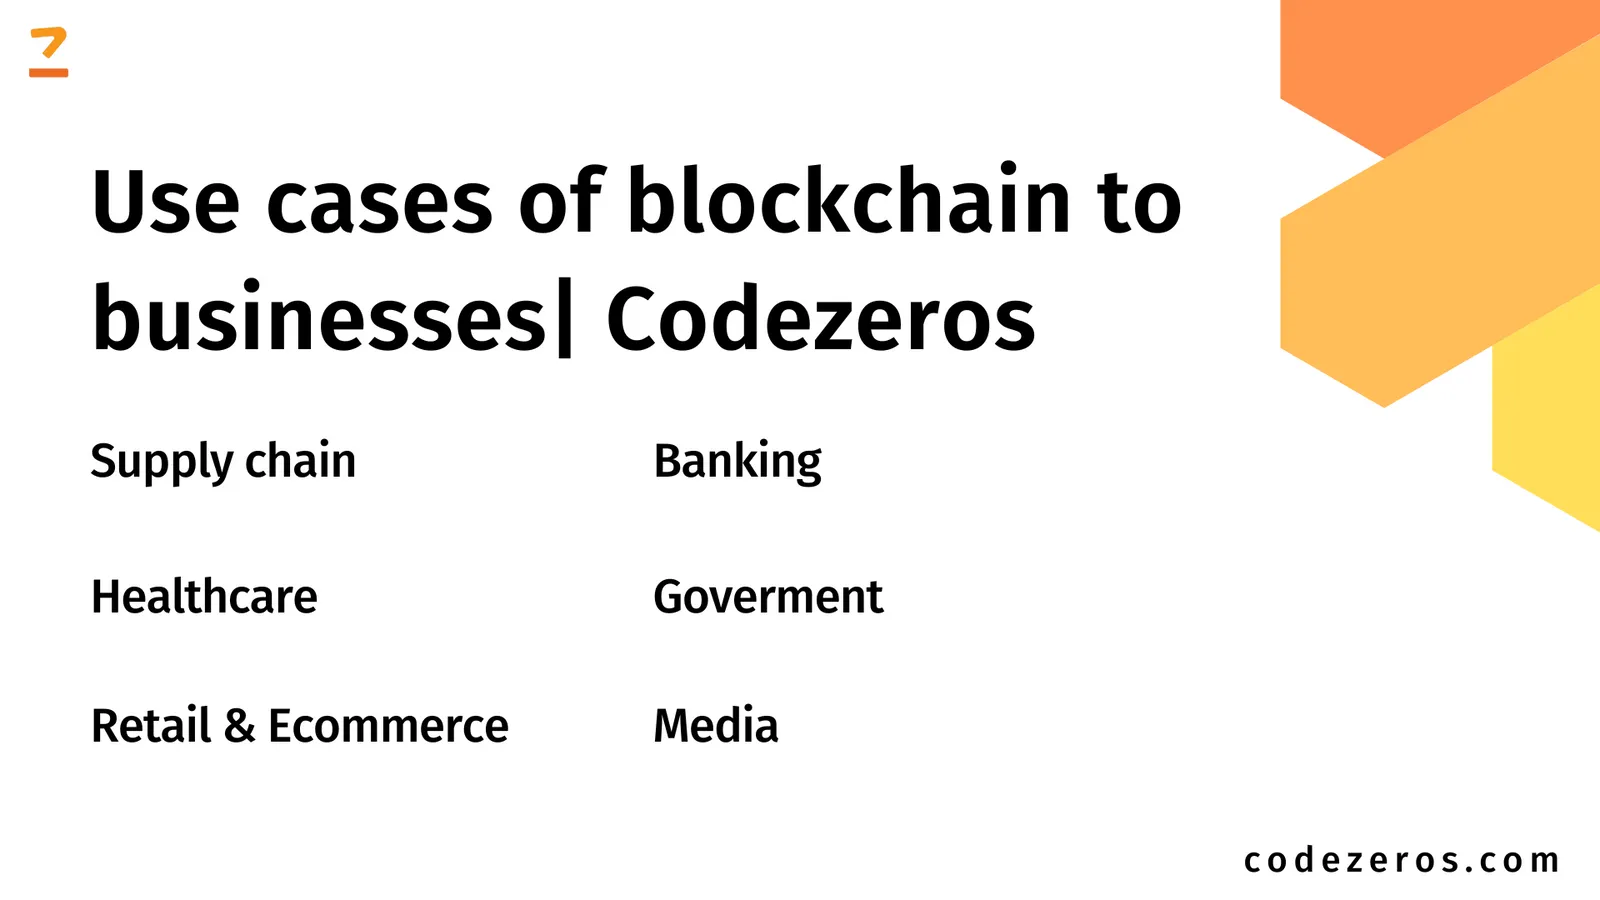 Use cases of blockchain to businesses| Codezeros